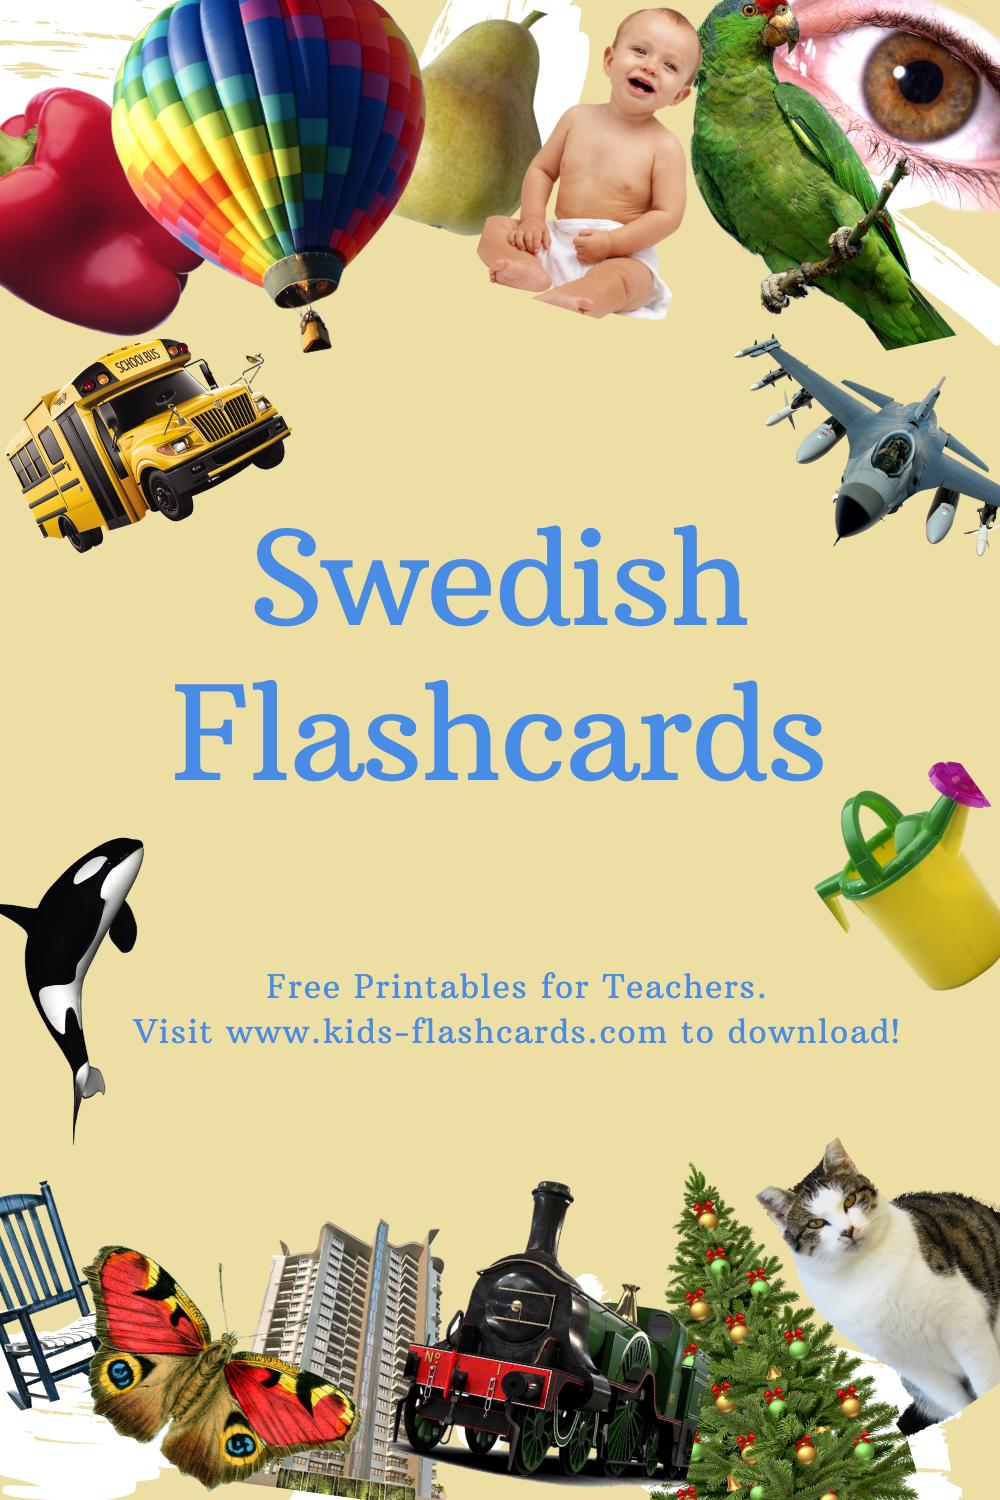 Worksheets to learn Swedish language